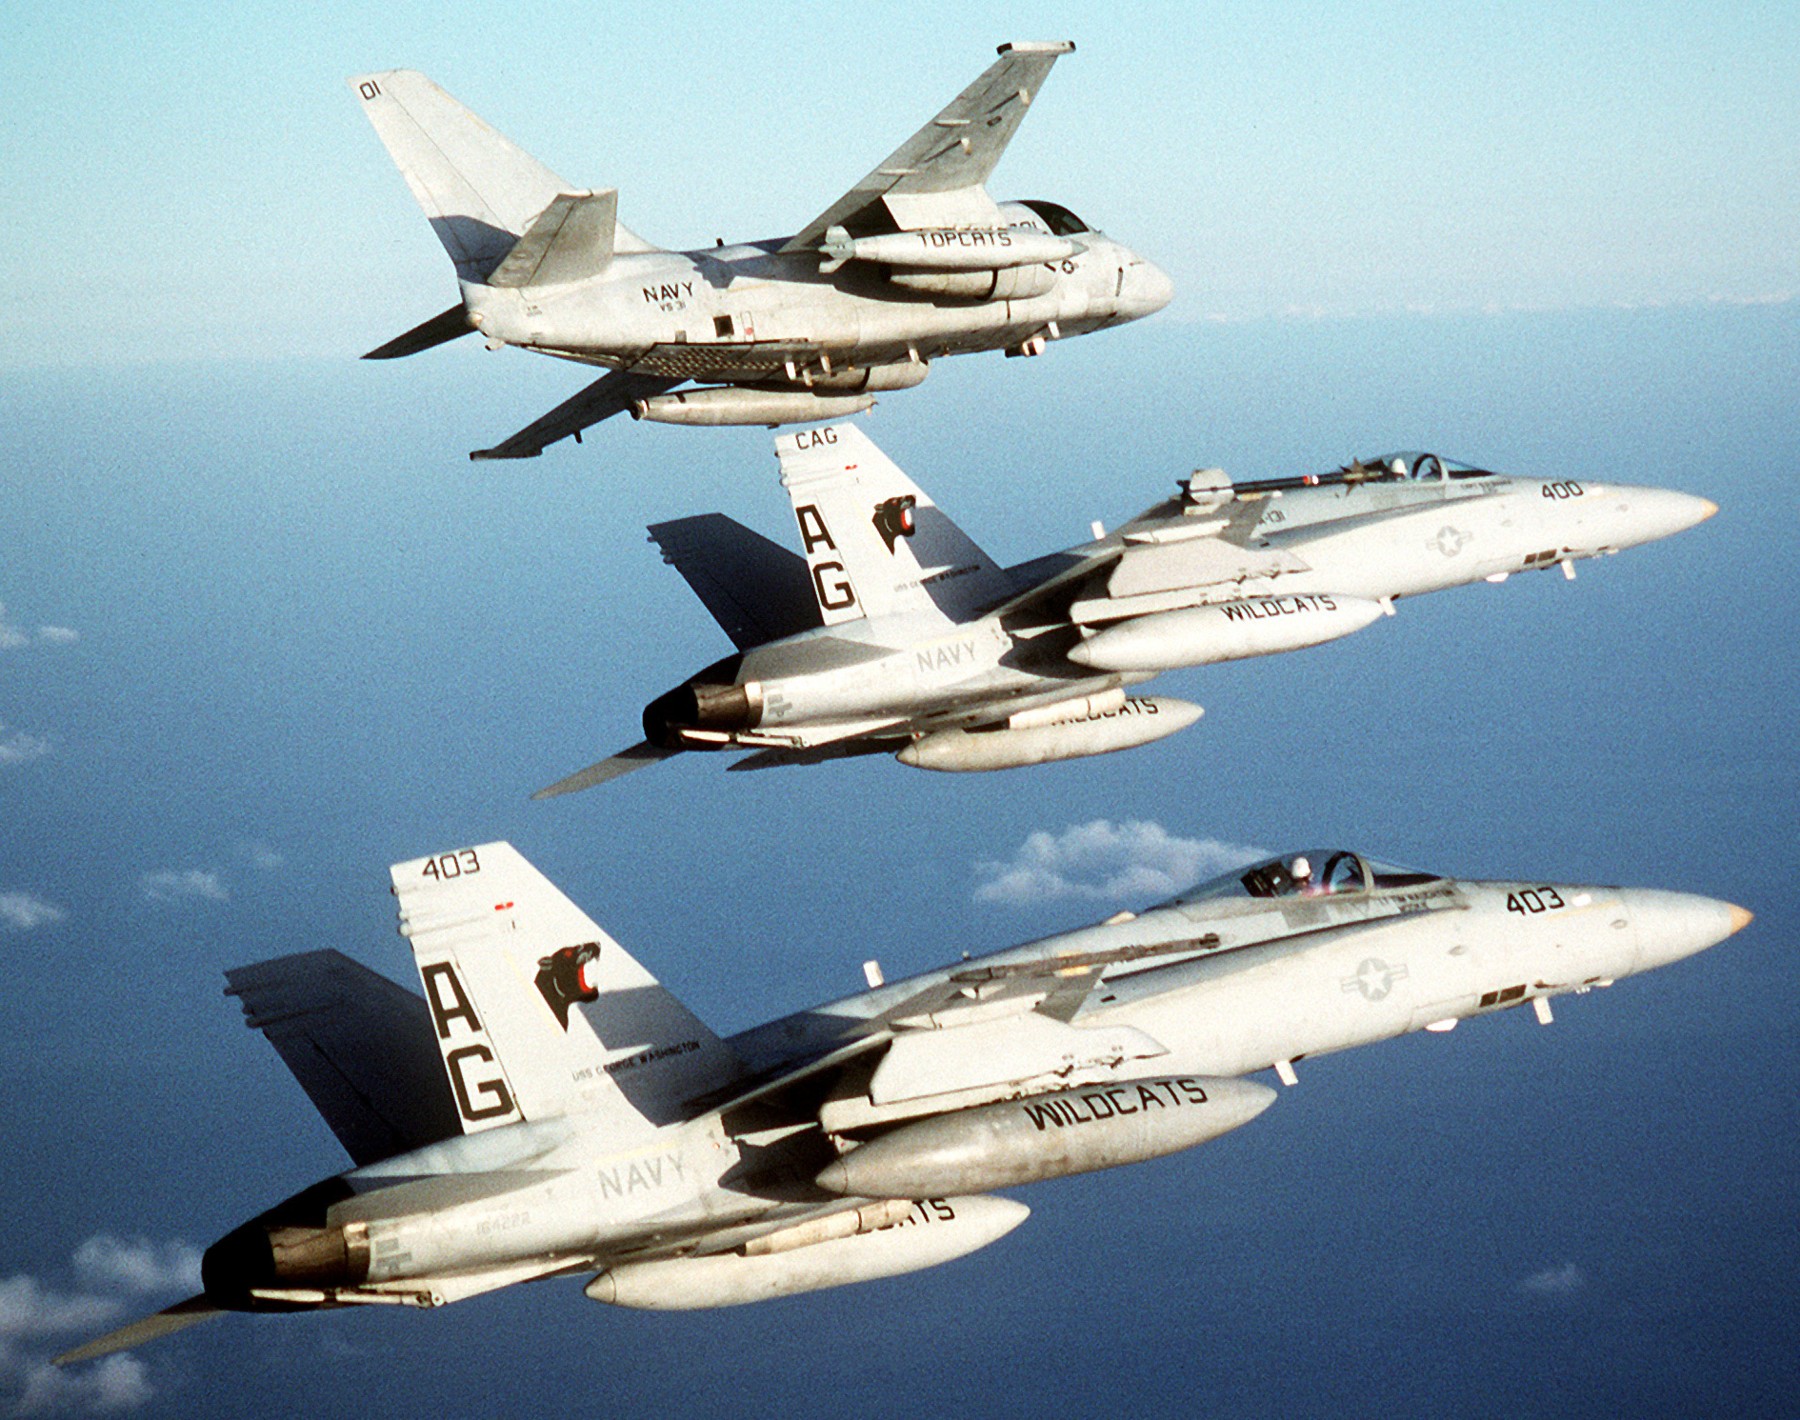 vfa-131 wildcats strike fighter squadron f/a-18c hornet cvw-7 s-3 viking vs-31 1992 131